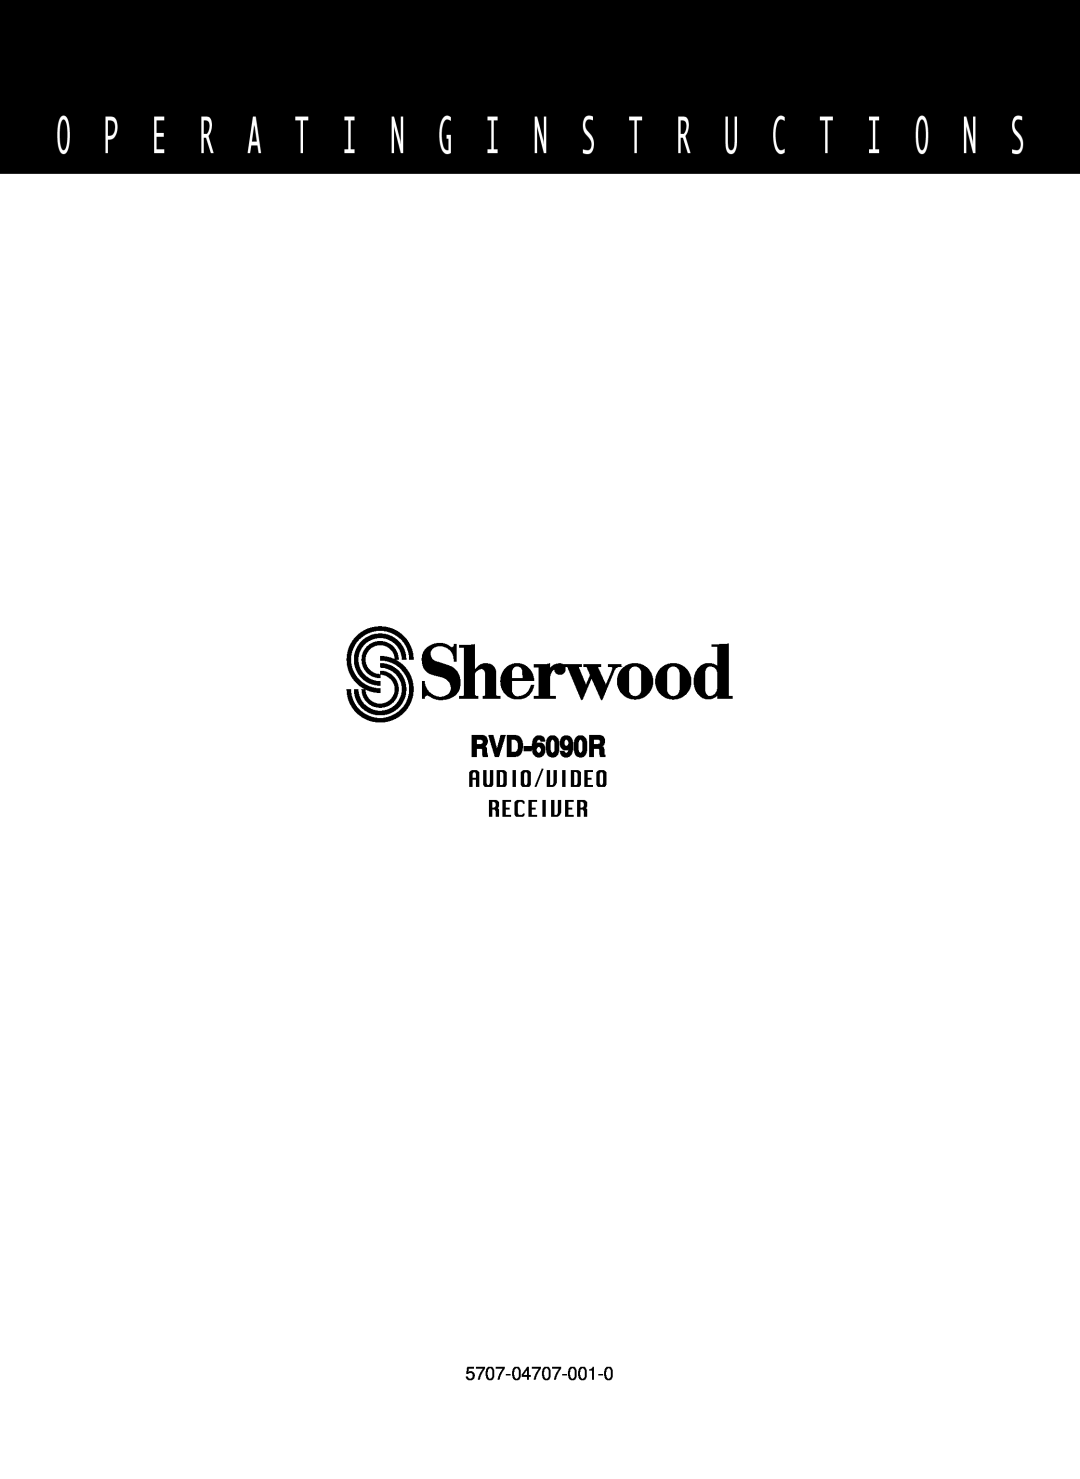 Sherwood RVD-6090R operating instructions O P E R A T I N G I N S T R U C T I O N S, Audio/Video Receiver 